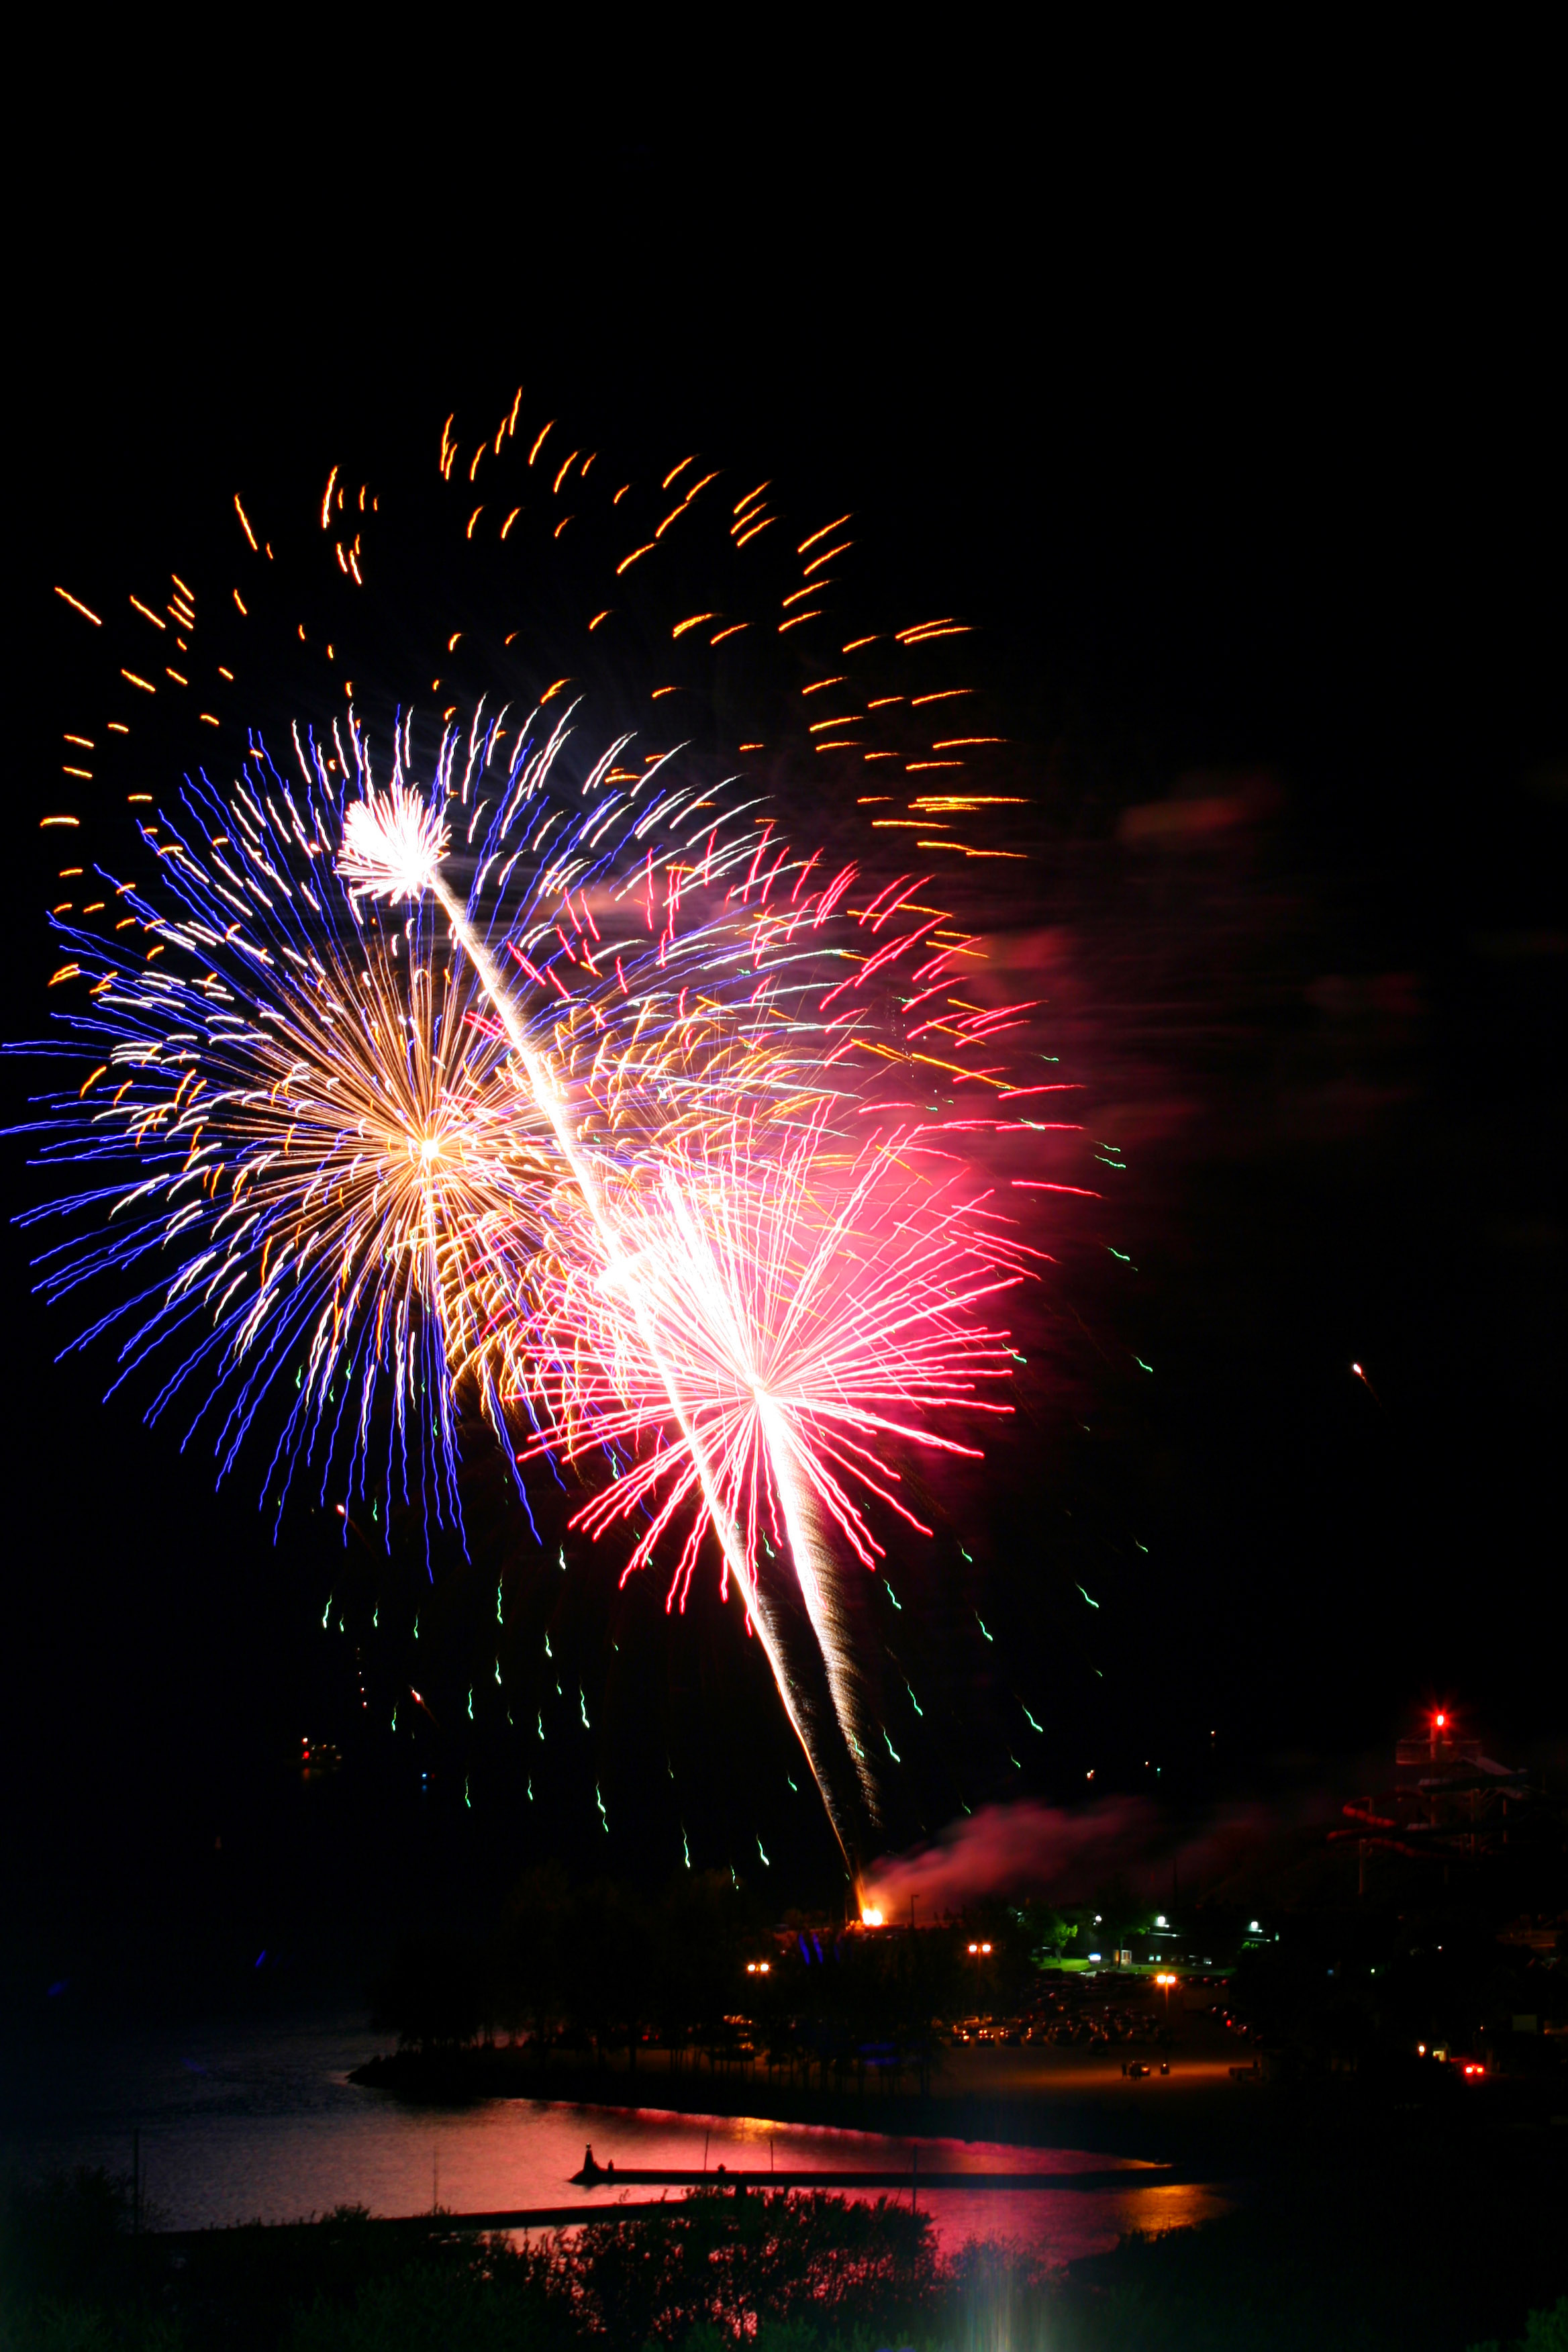 FileVictoria Day fireworks Toronto 2010.jpg Wikipedia, the free